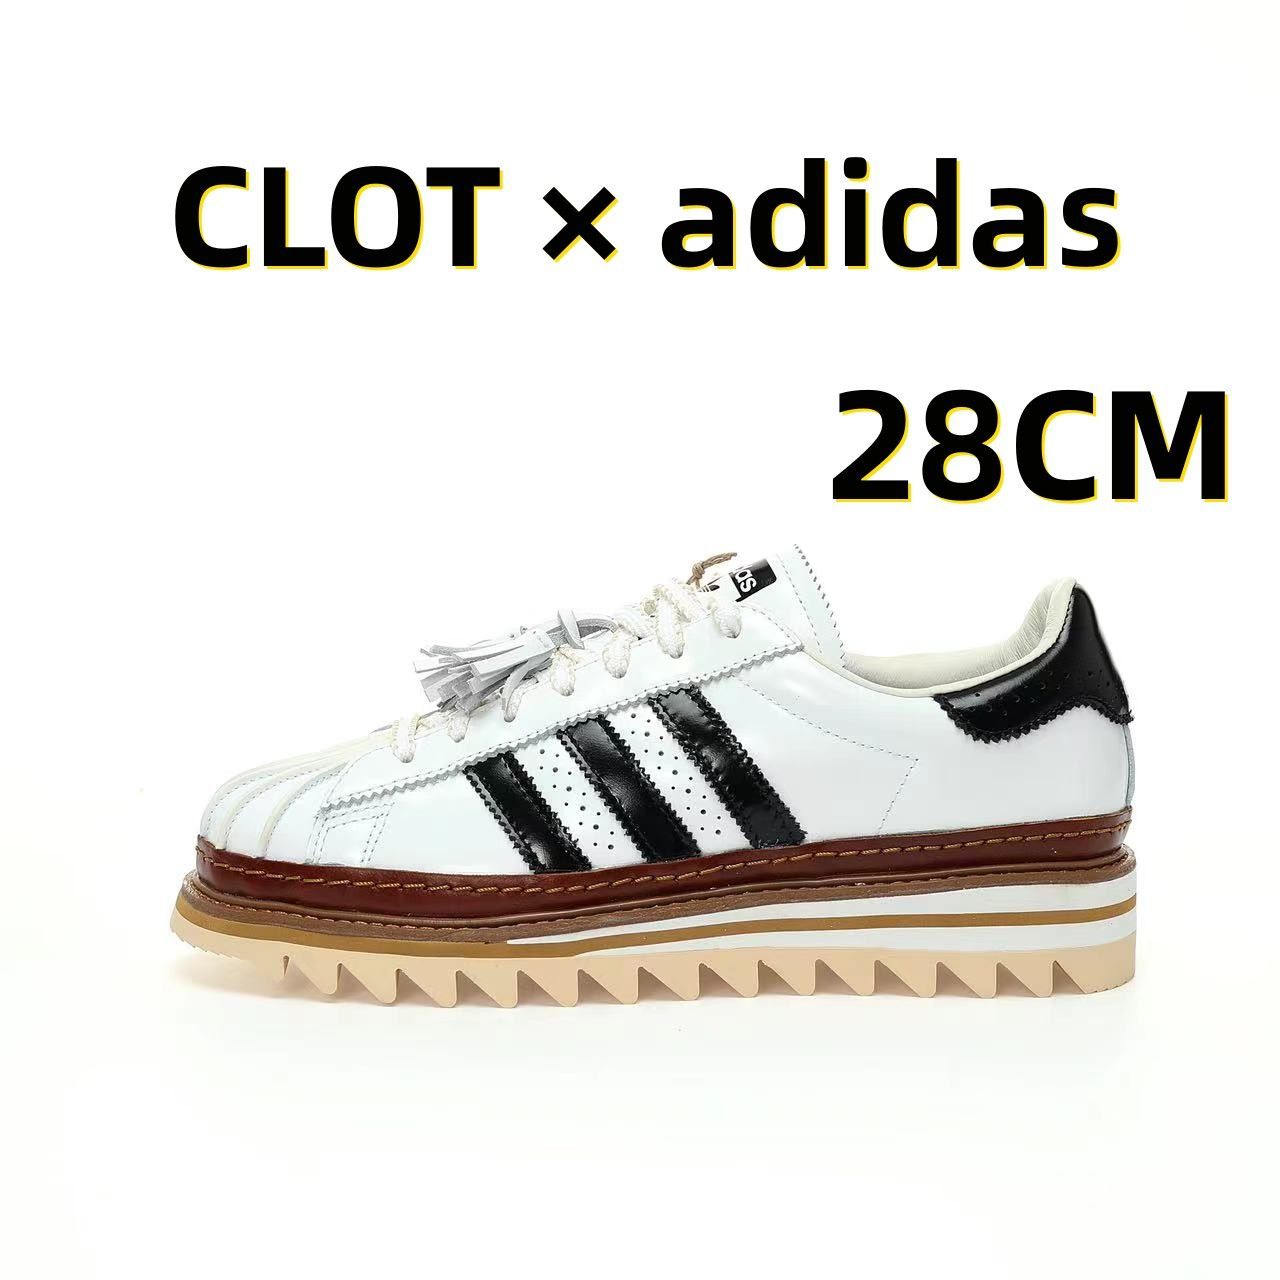 CLOT × adidas Originals Superstar 28CM